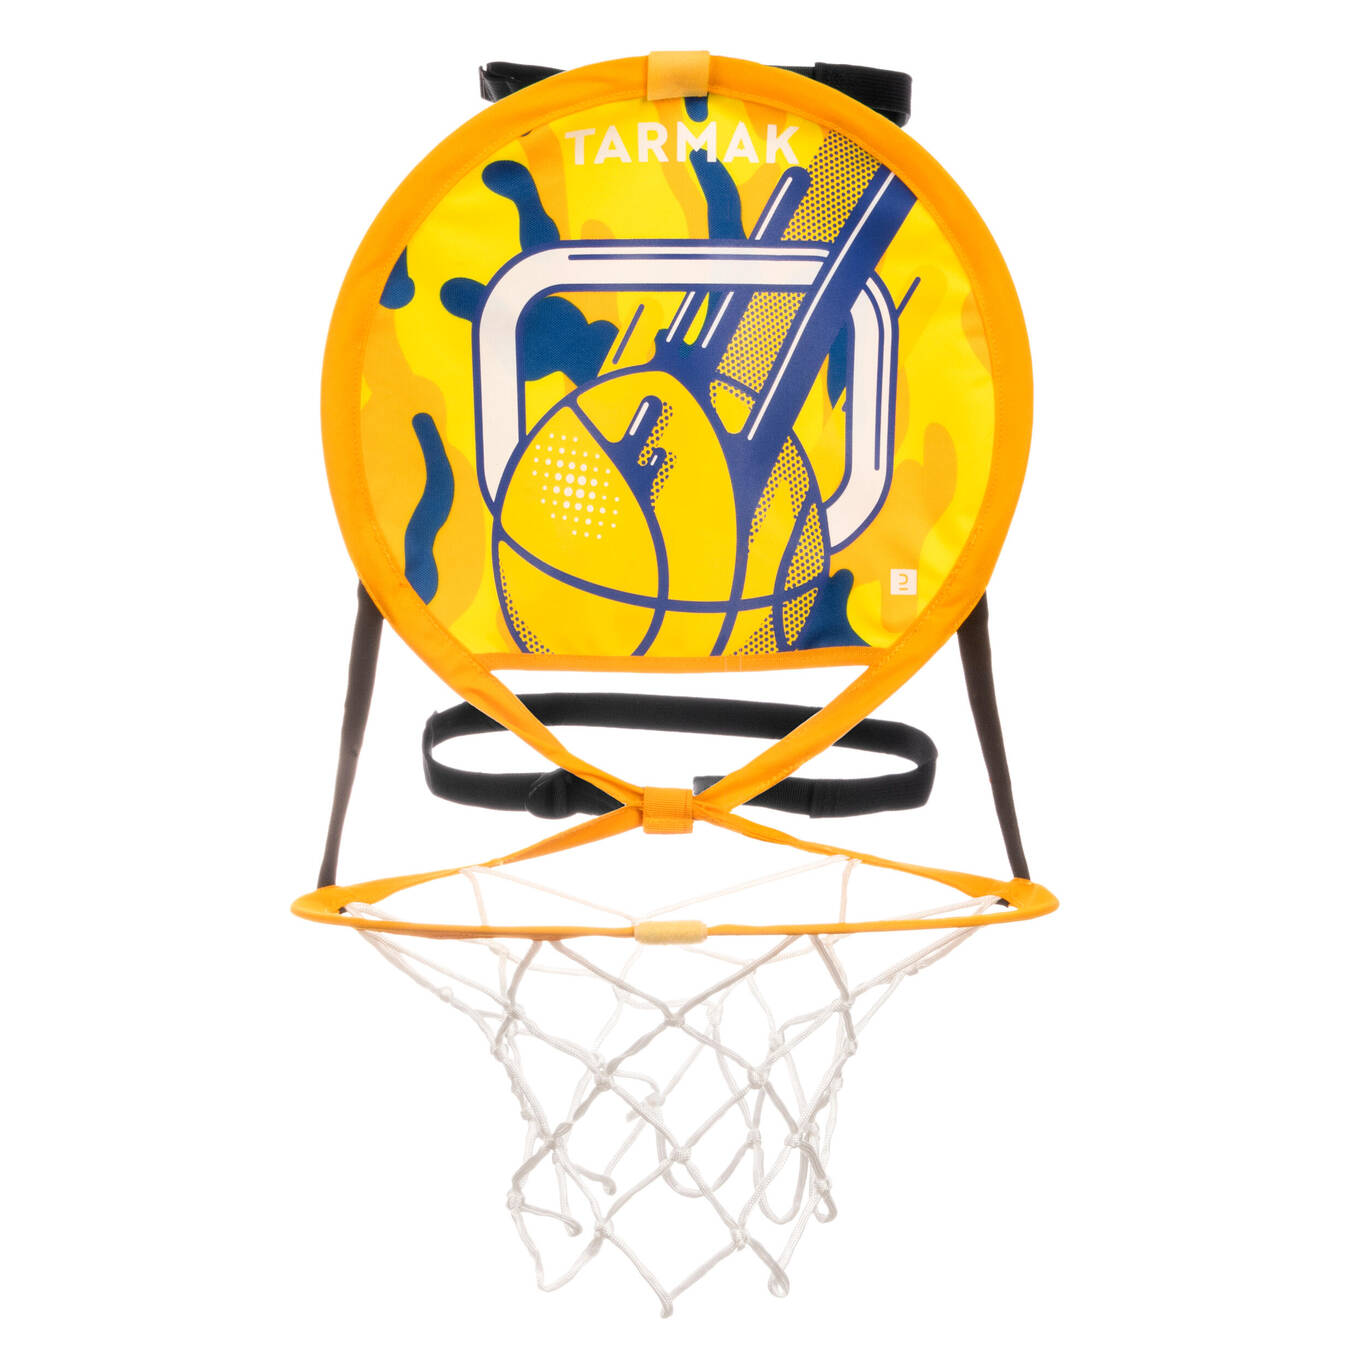 Kids' Wall-Mounted Portable Basketball Basket with Ball Hoop 100 - Yellow/Blue